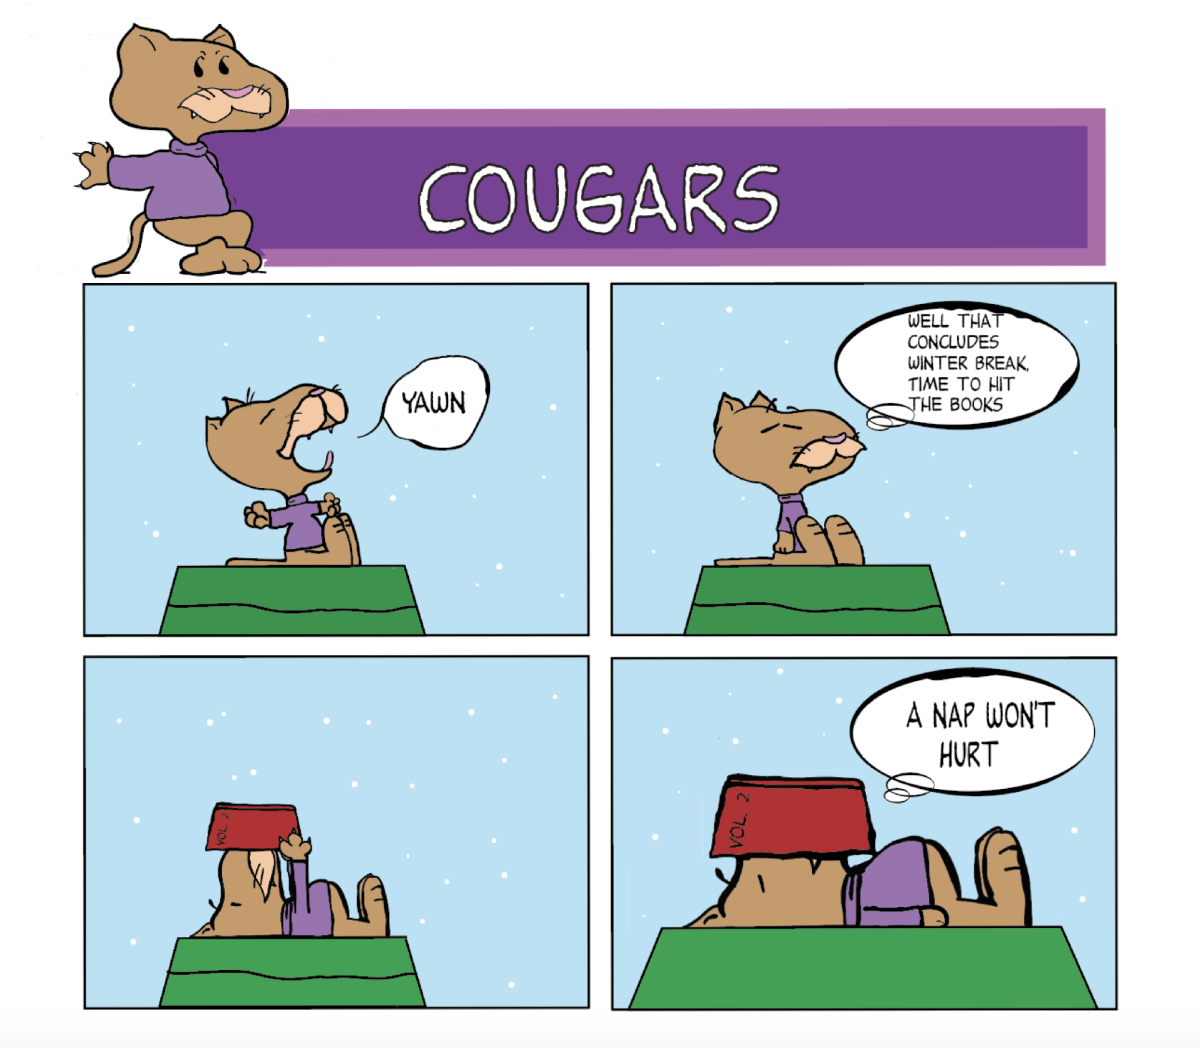 Carson+the+Cougar+comic